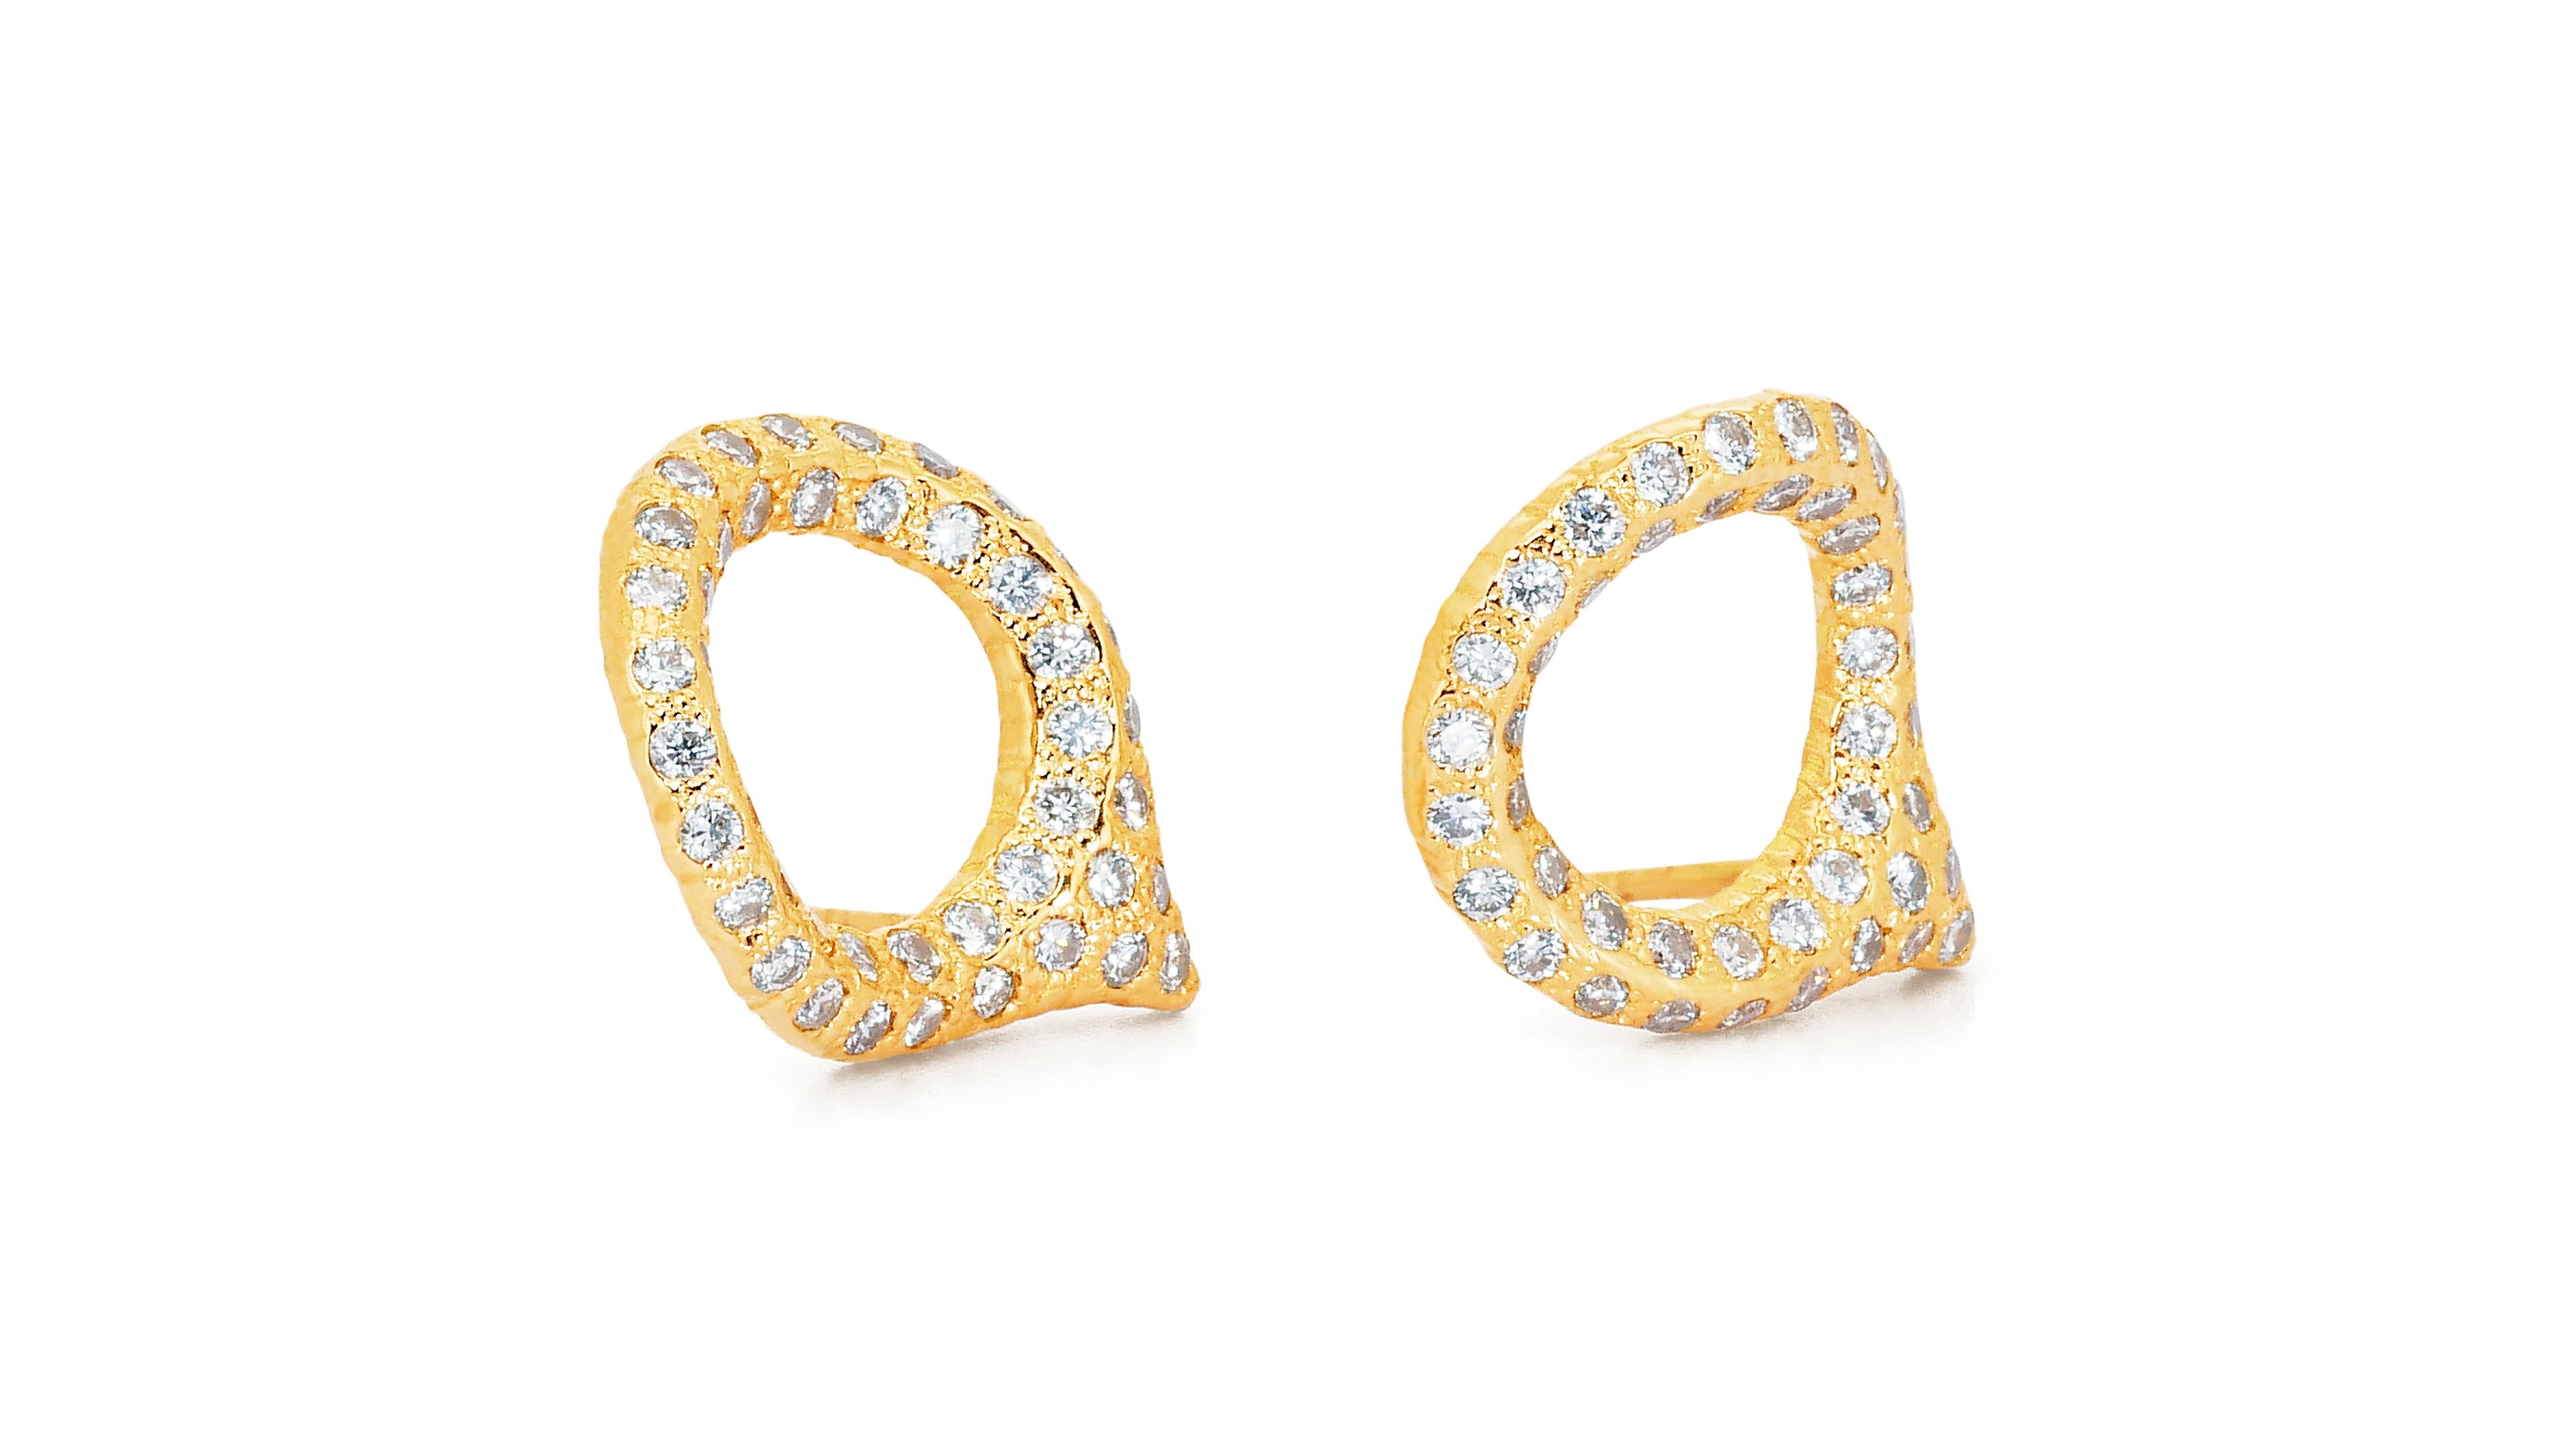 Women's Glamorous 18k Yellow Gold Earrings w/ 1.28ct Natural Diamonds IGI Certificate For Sale